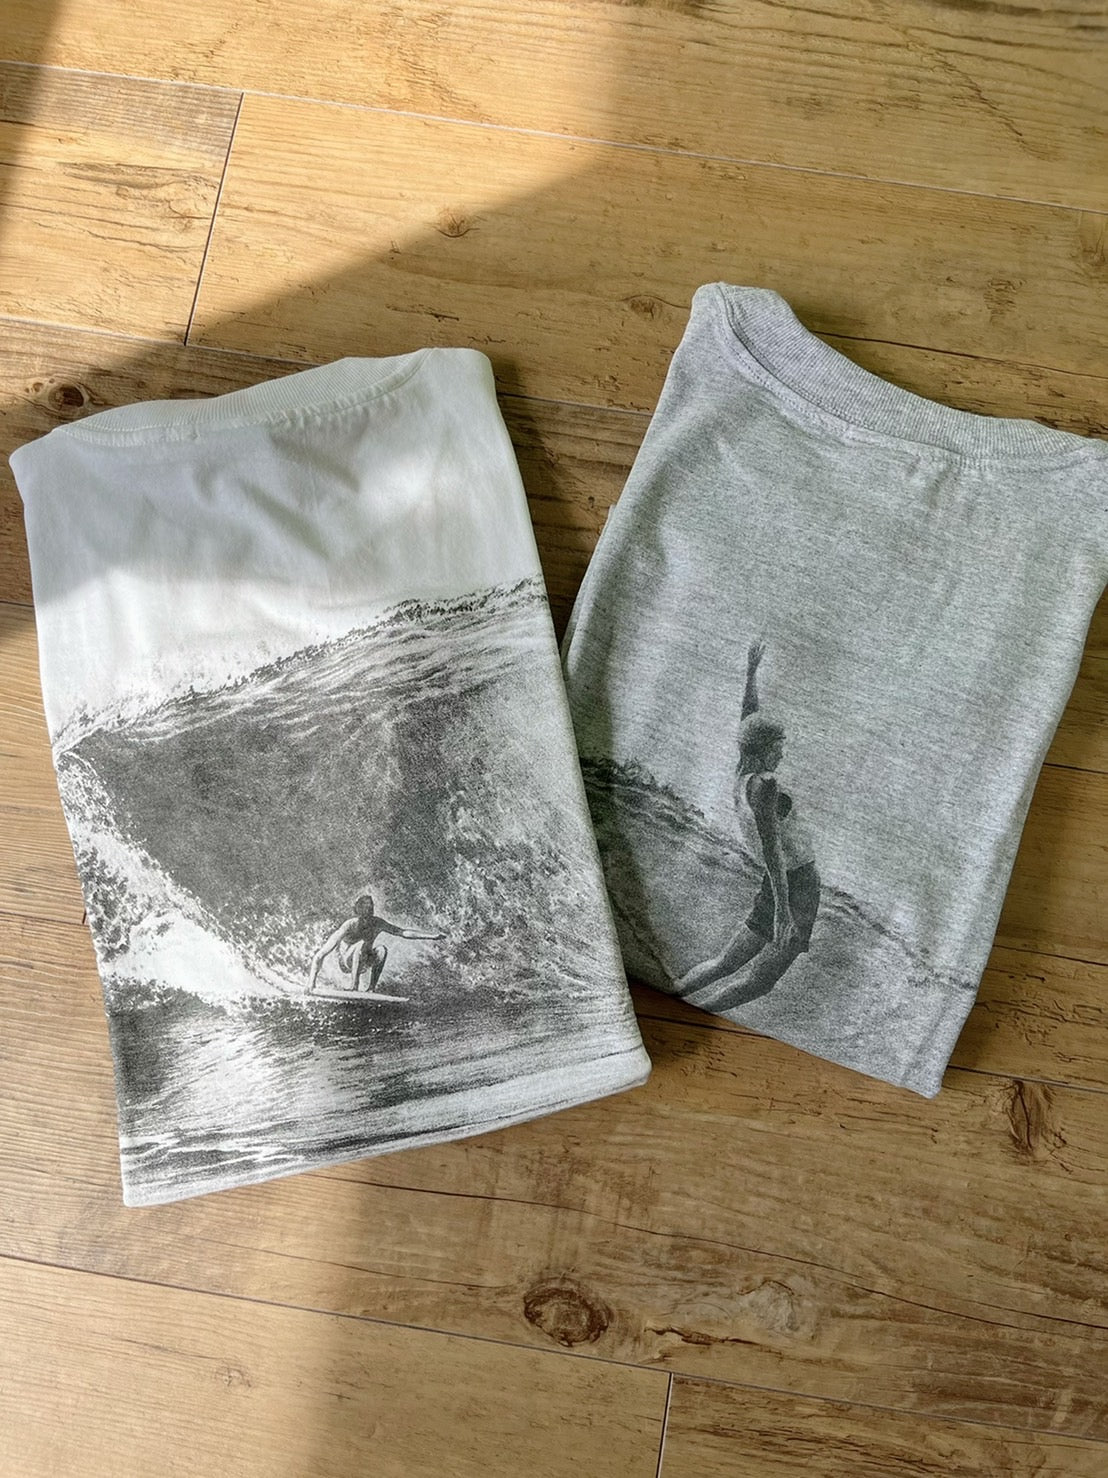 【Solitude】00's Y2K surf the waterman series  Debit Nuuhiwa T-shirt （men's L)